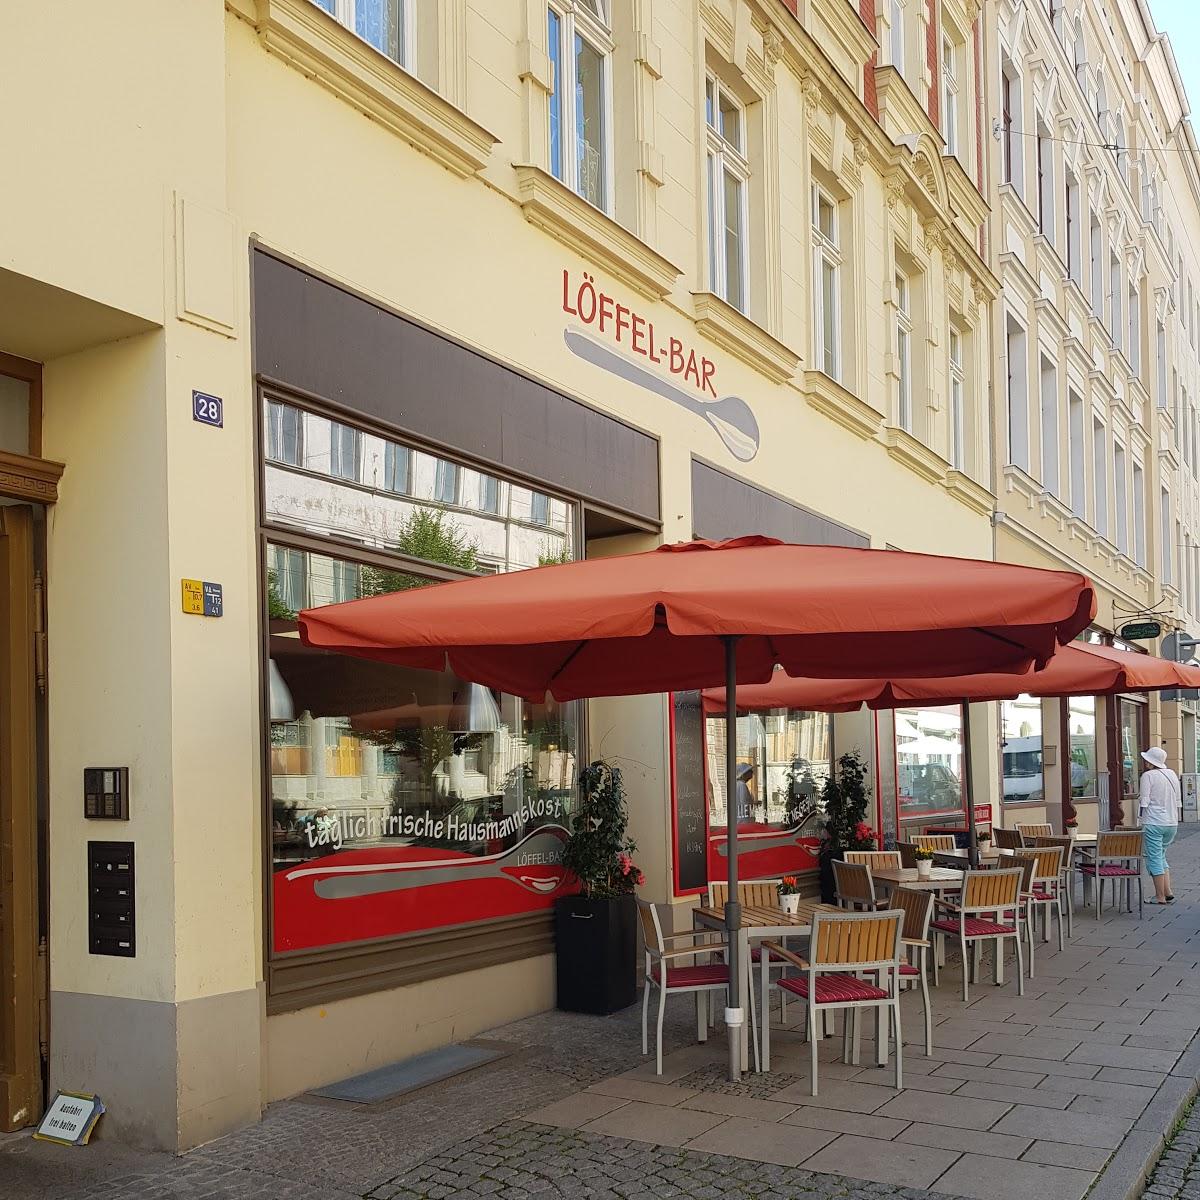 Restaurant "Löffel-Bar" in Görlitz